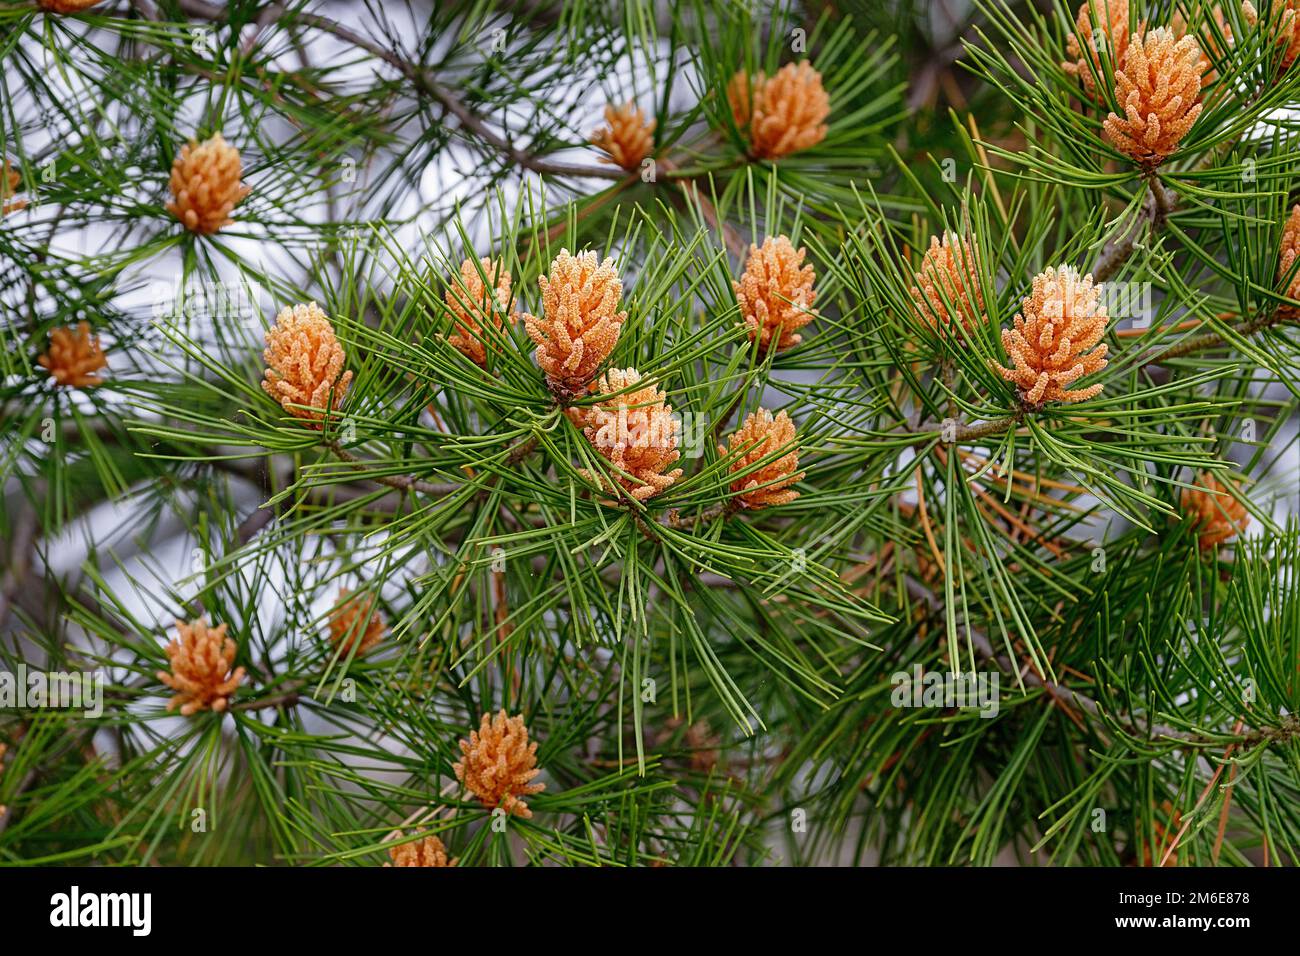 Polen cones of Lace-bark pine (Pinus bungeana) Stock Photo